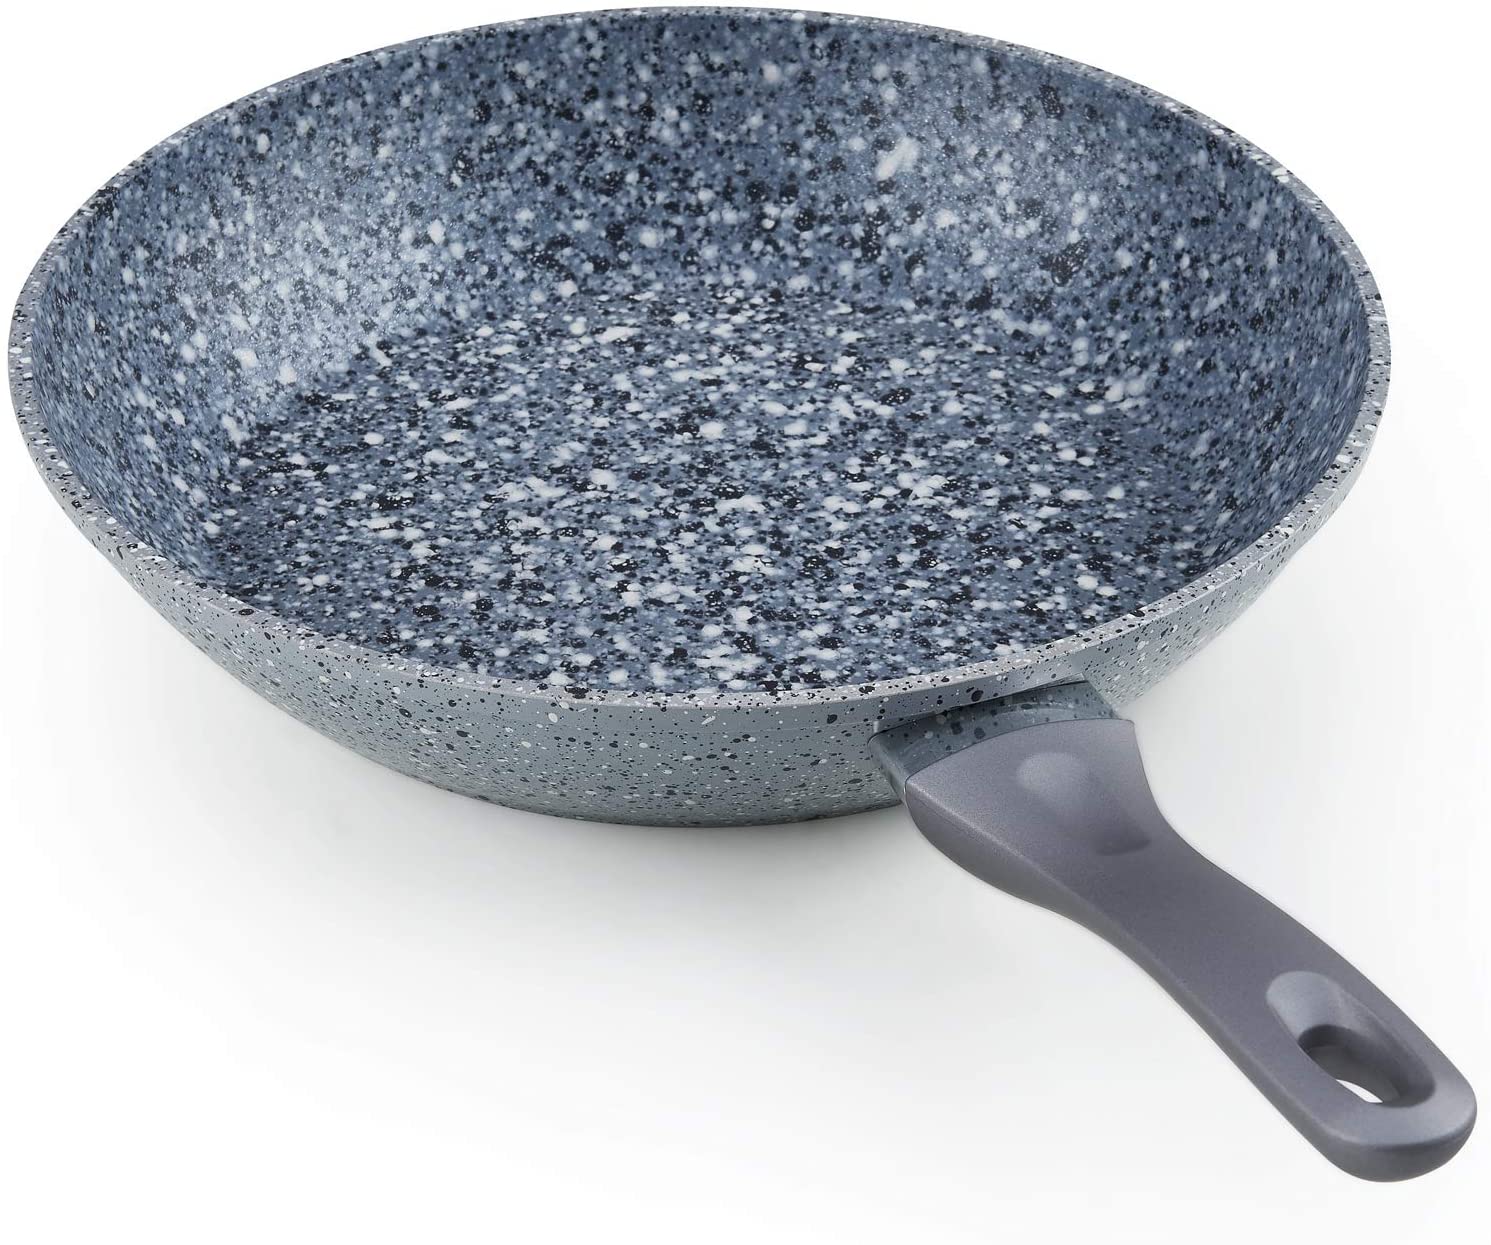 https://www.dontwasteyourmoney.com/wp-content/uploads/2020/05/cook-n-home-02668-ultra-granite-nonstick-stone-frying-pan-12-inch-stone-frying-pan-1.jpg